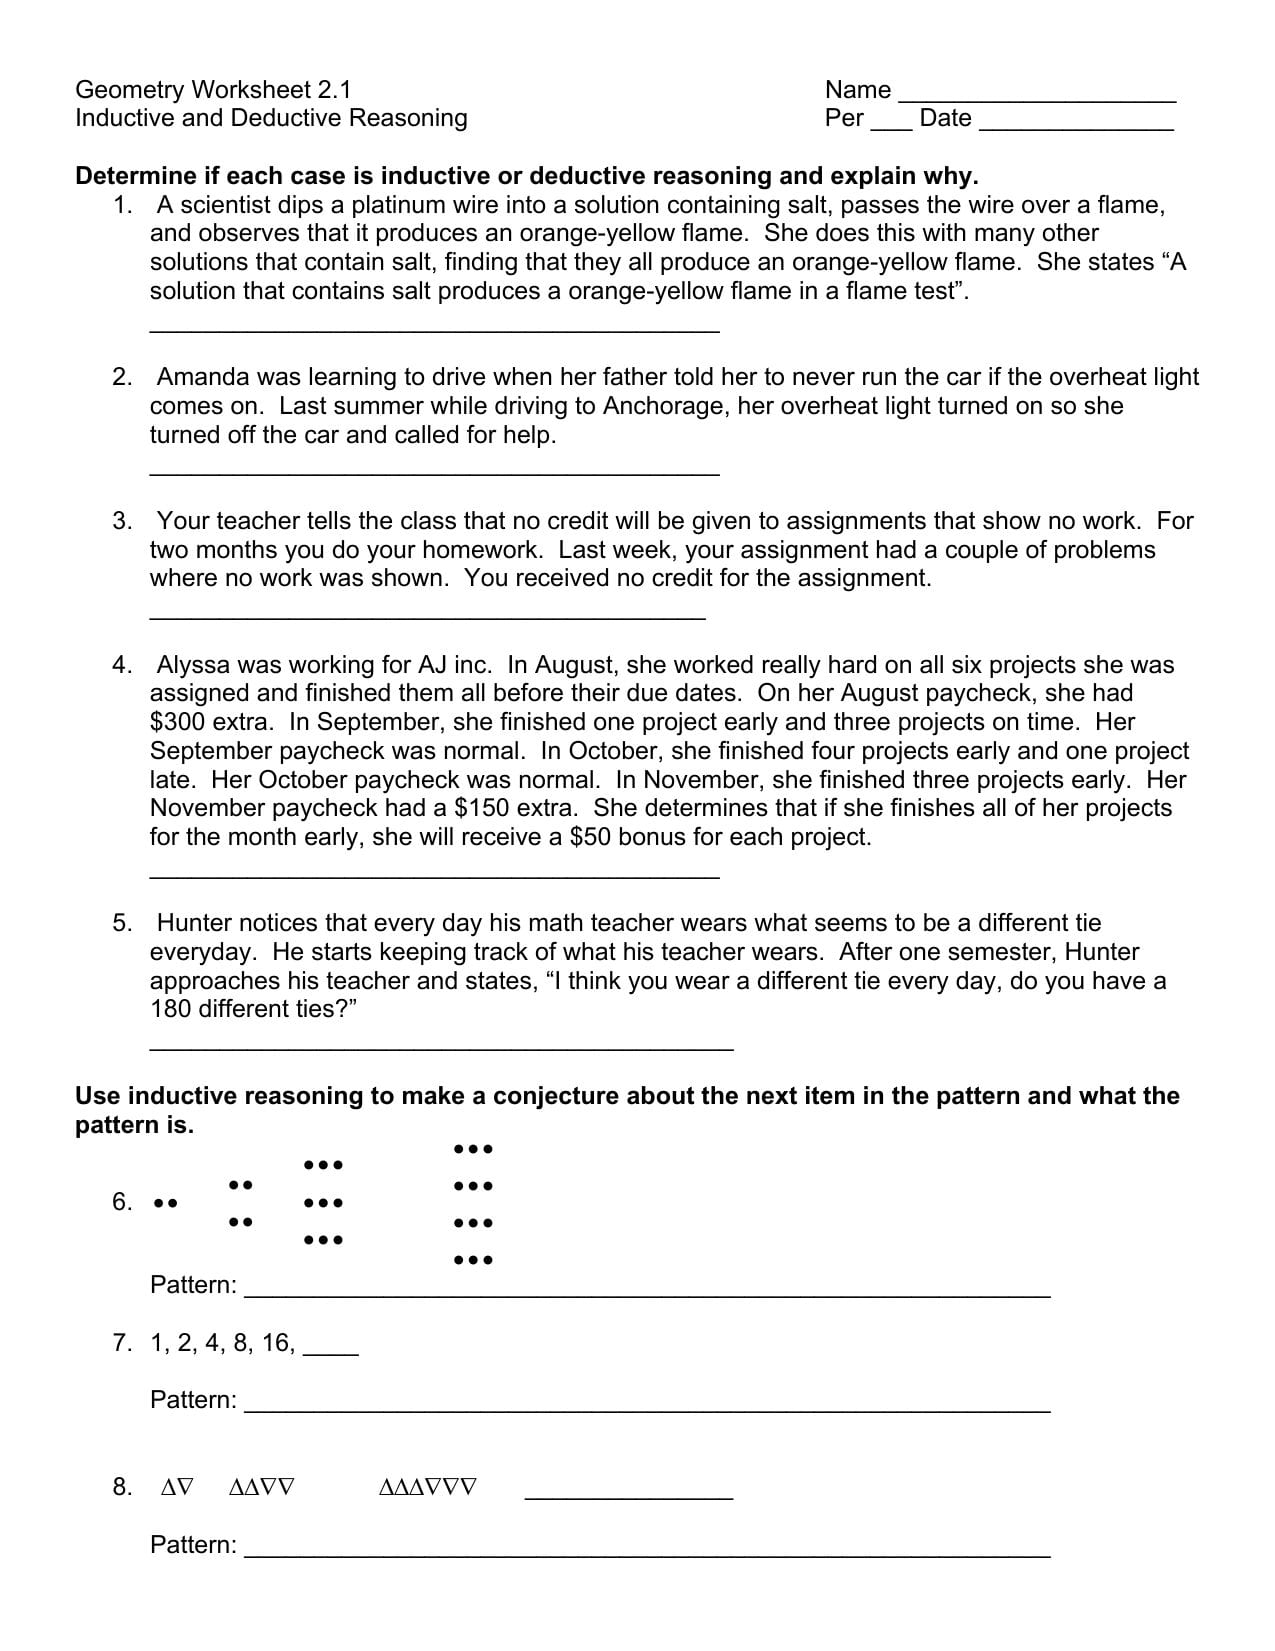 Geometry Worksheet 21 Name Inductive And Deductive Reasoning